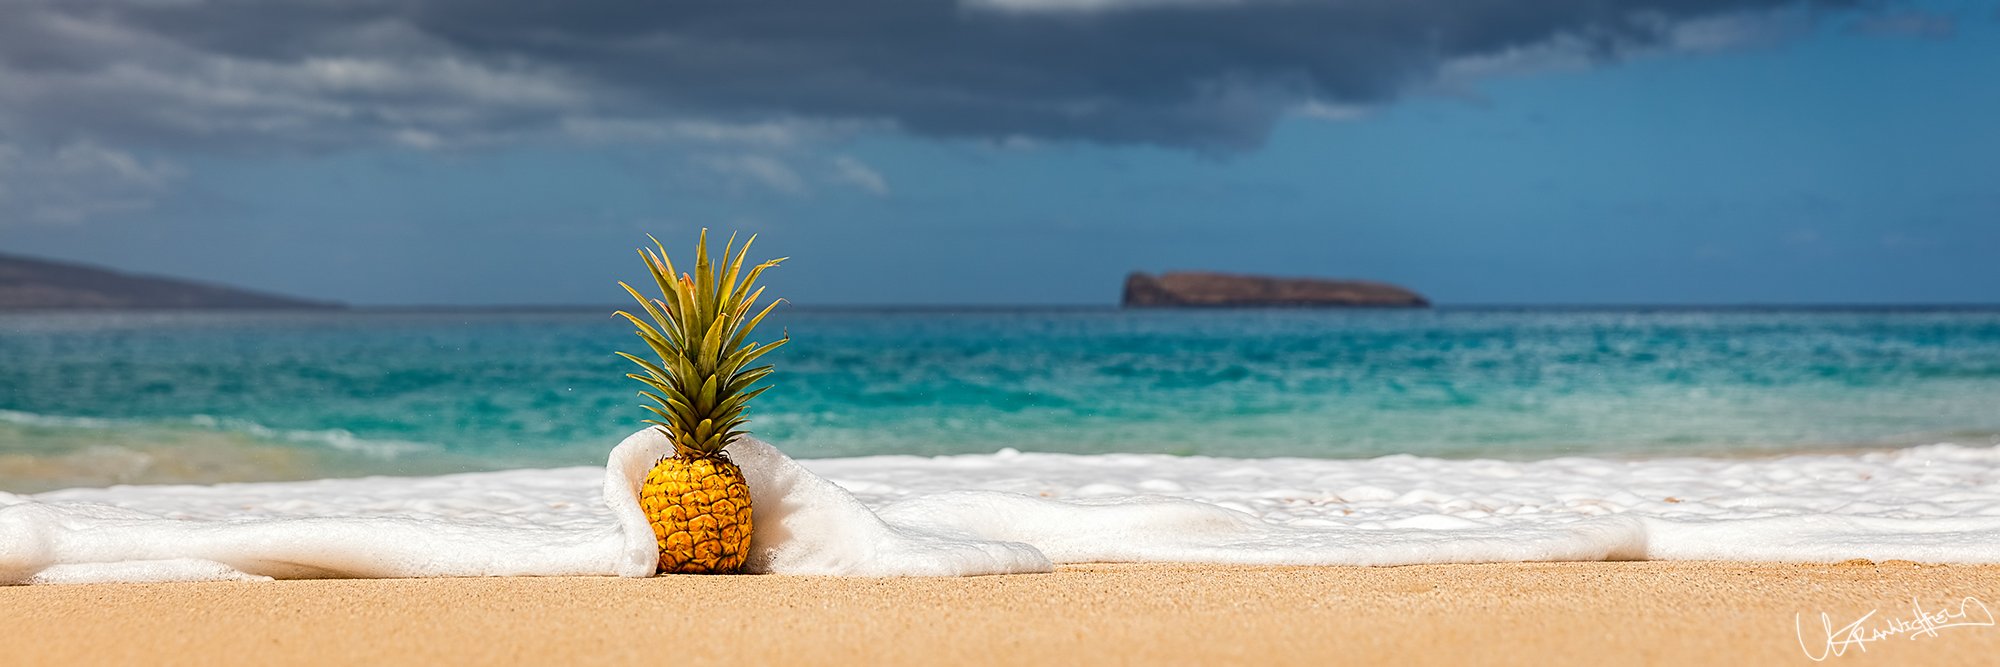 Pineapple in a blanket.jpg